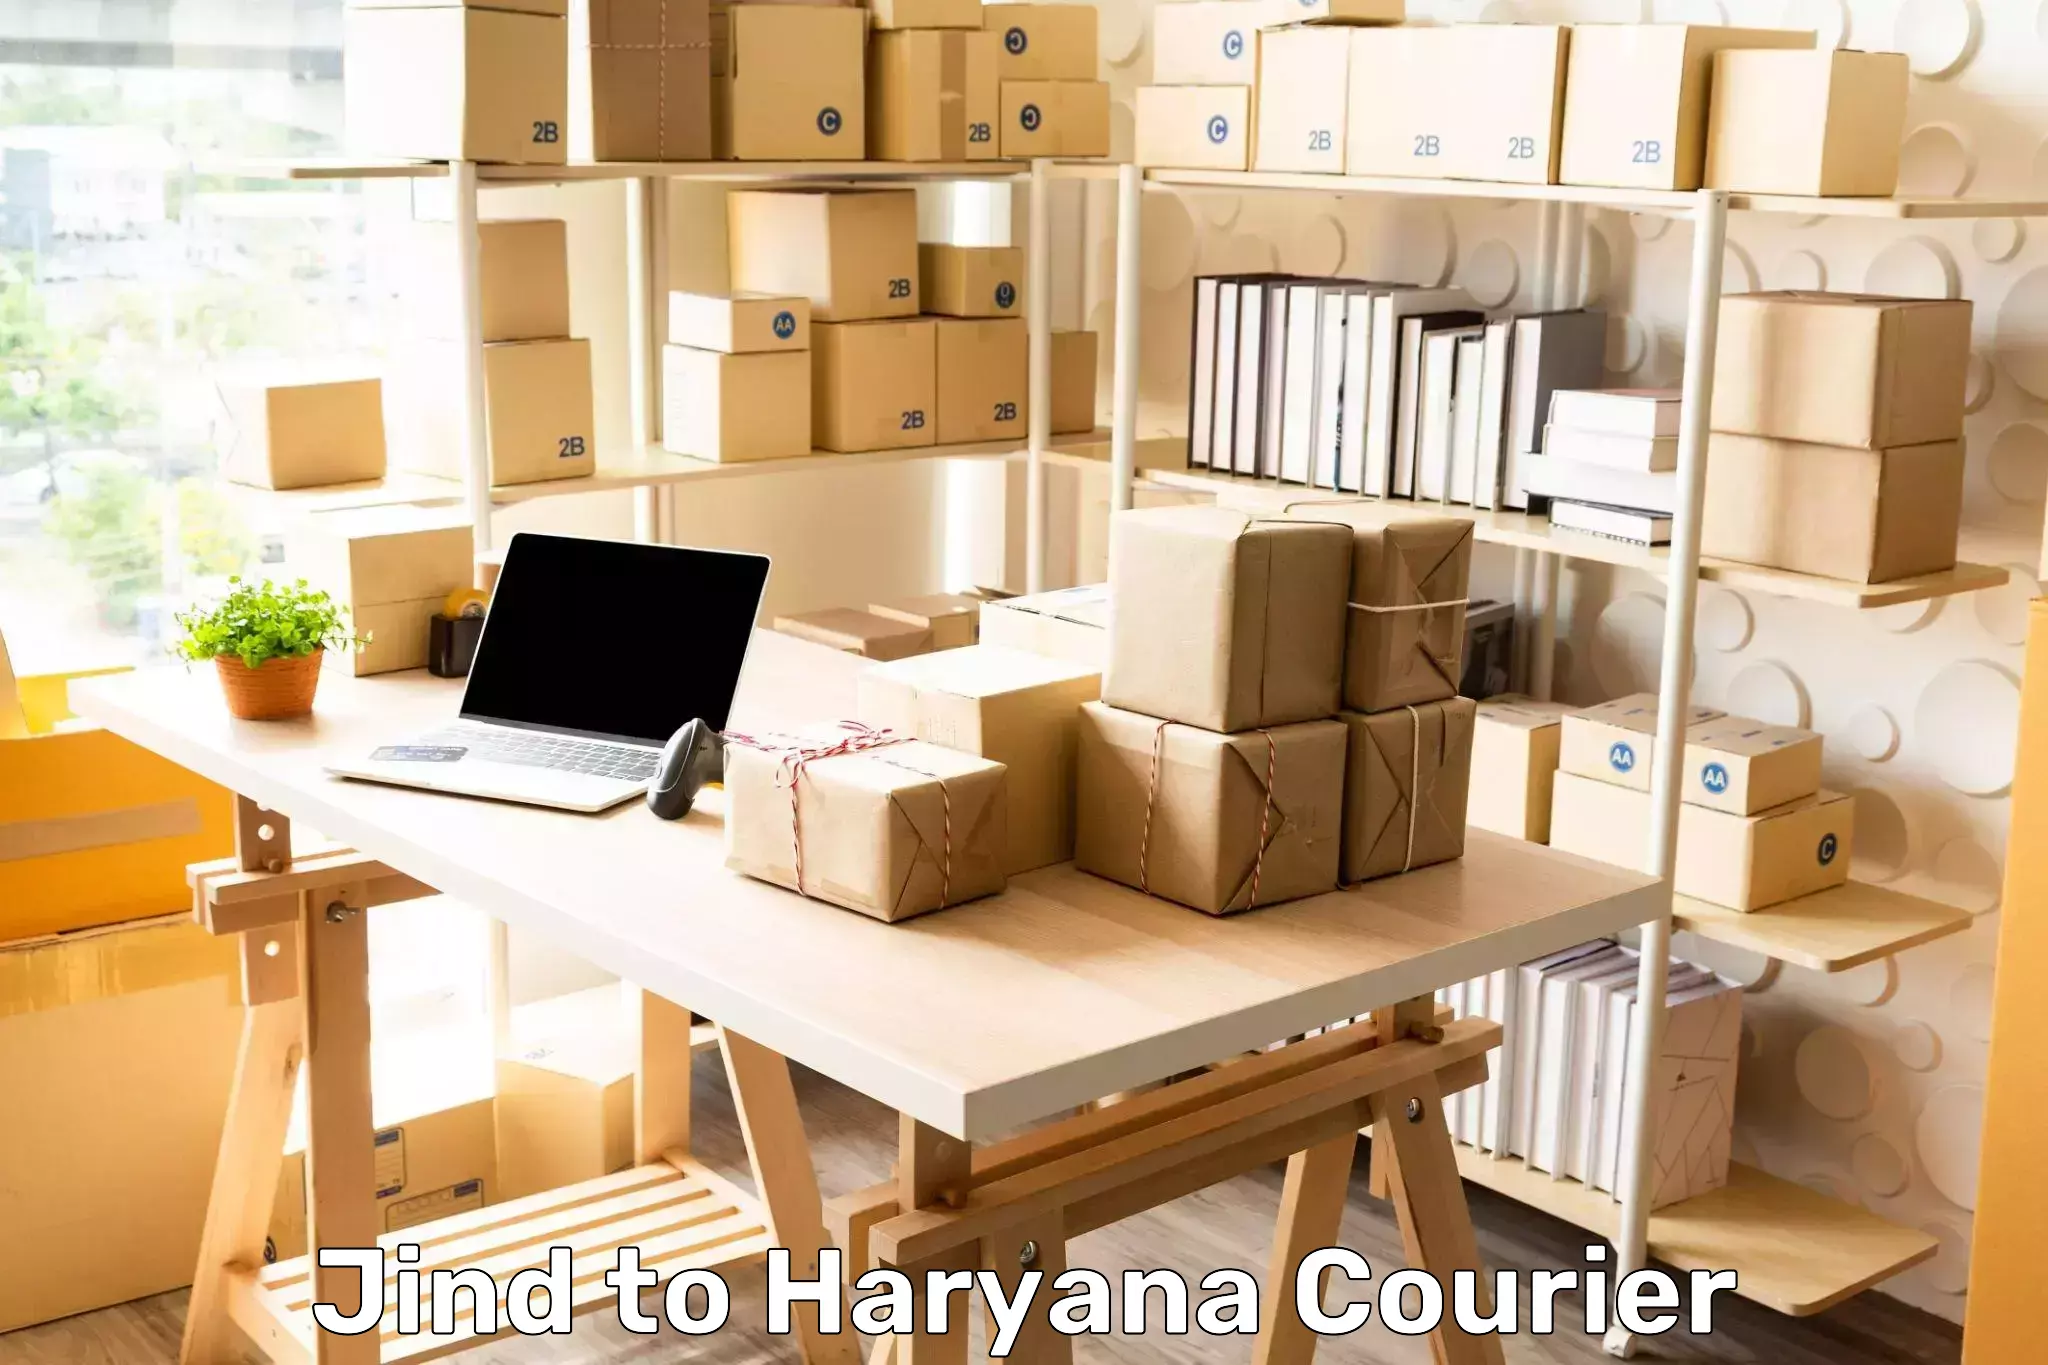 Ground shipping Jind to NCR Haryana